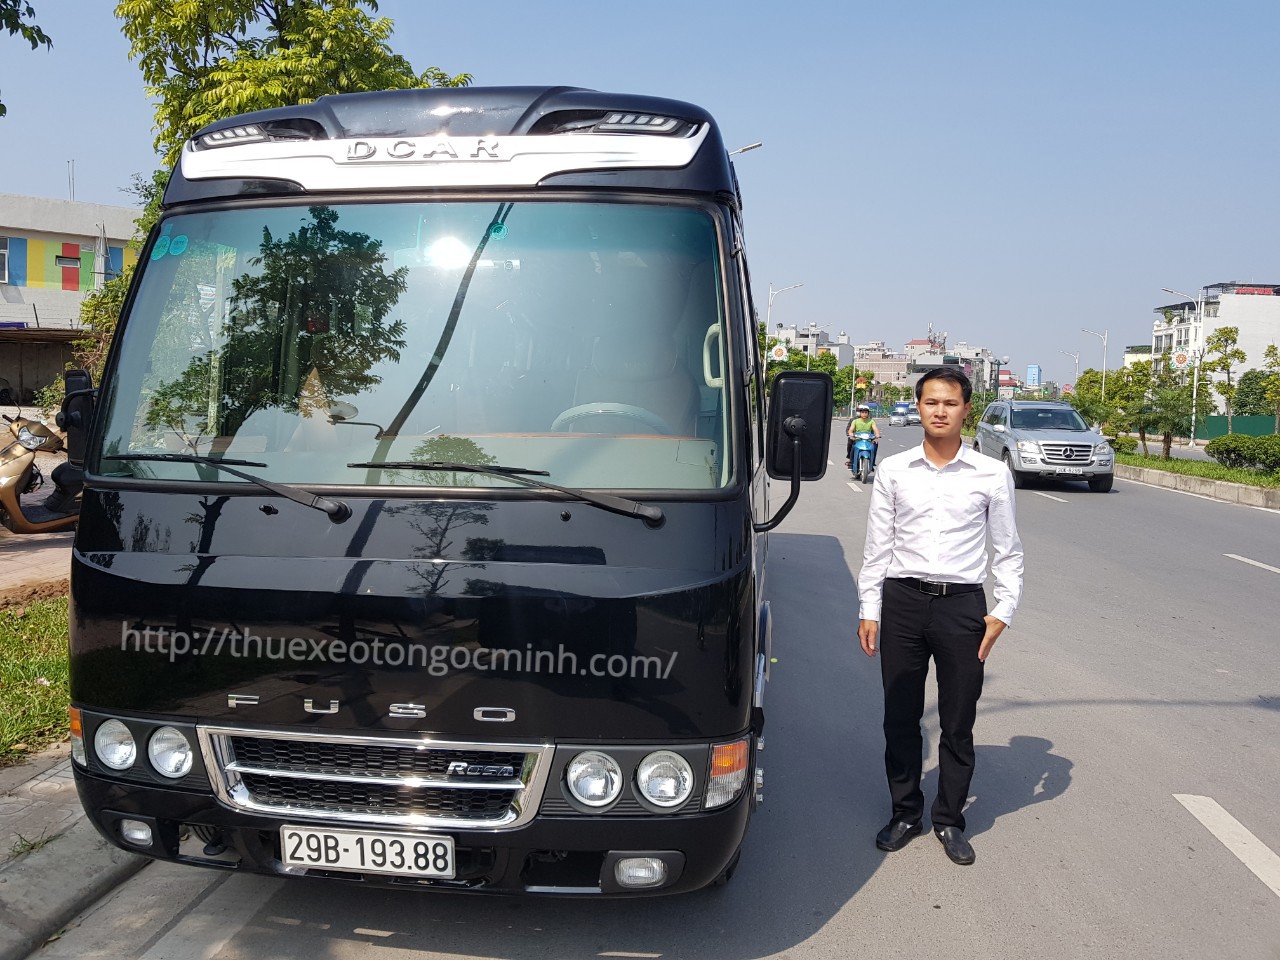 Thuê xe Fuso Rosa Dcar Limousine 19 chỗ tại Hà Nội